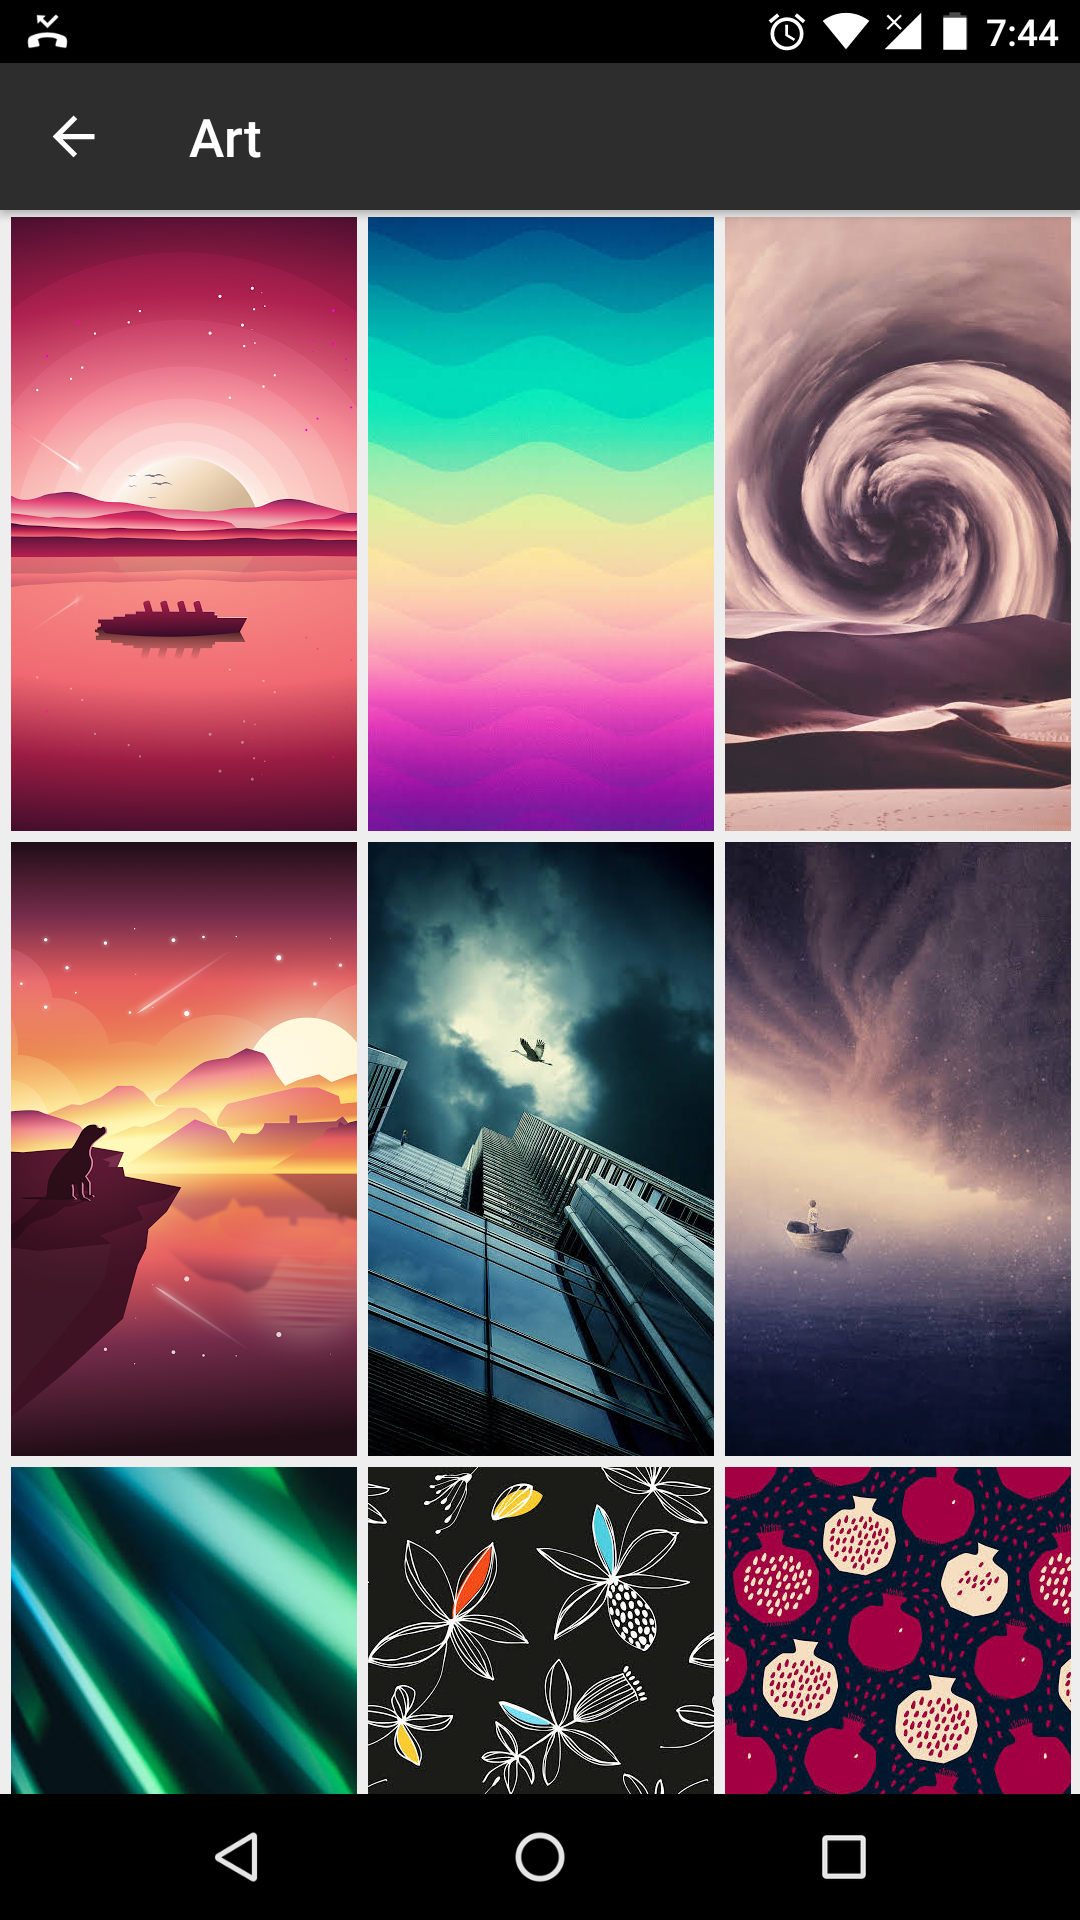 google phone wallpaper,himmel,grafikdesign,collage,buntheit,fotografie